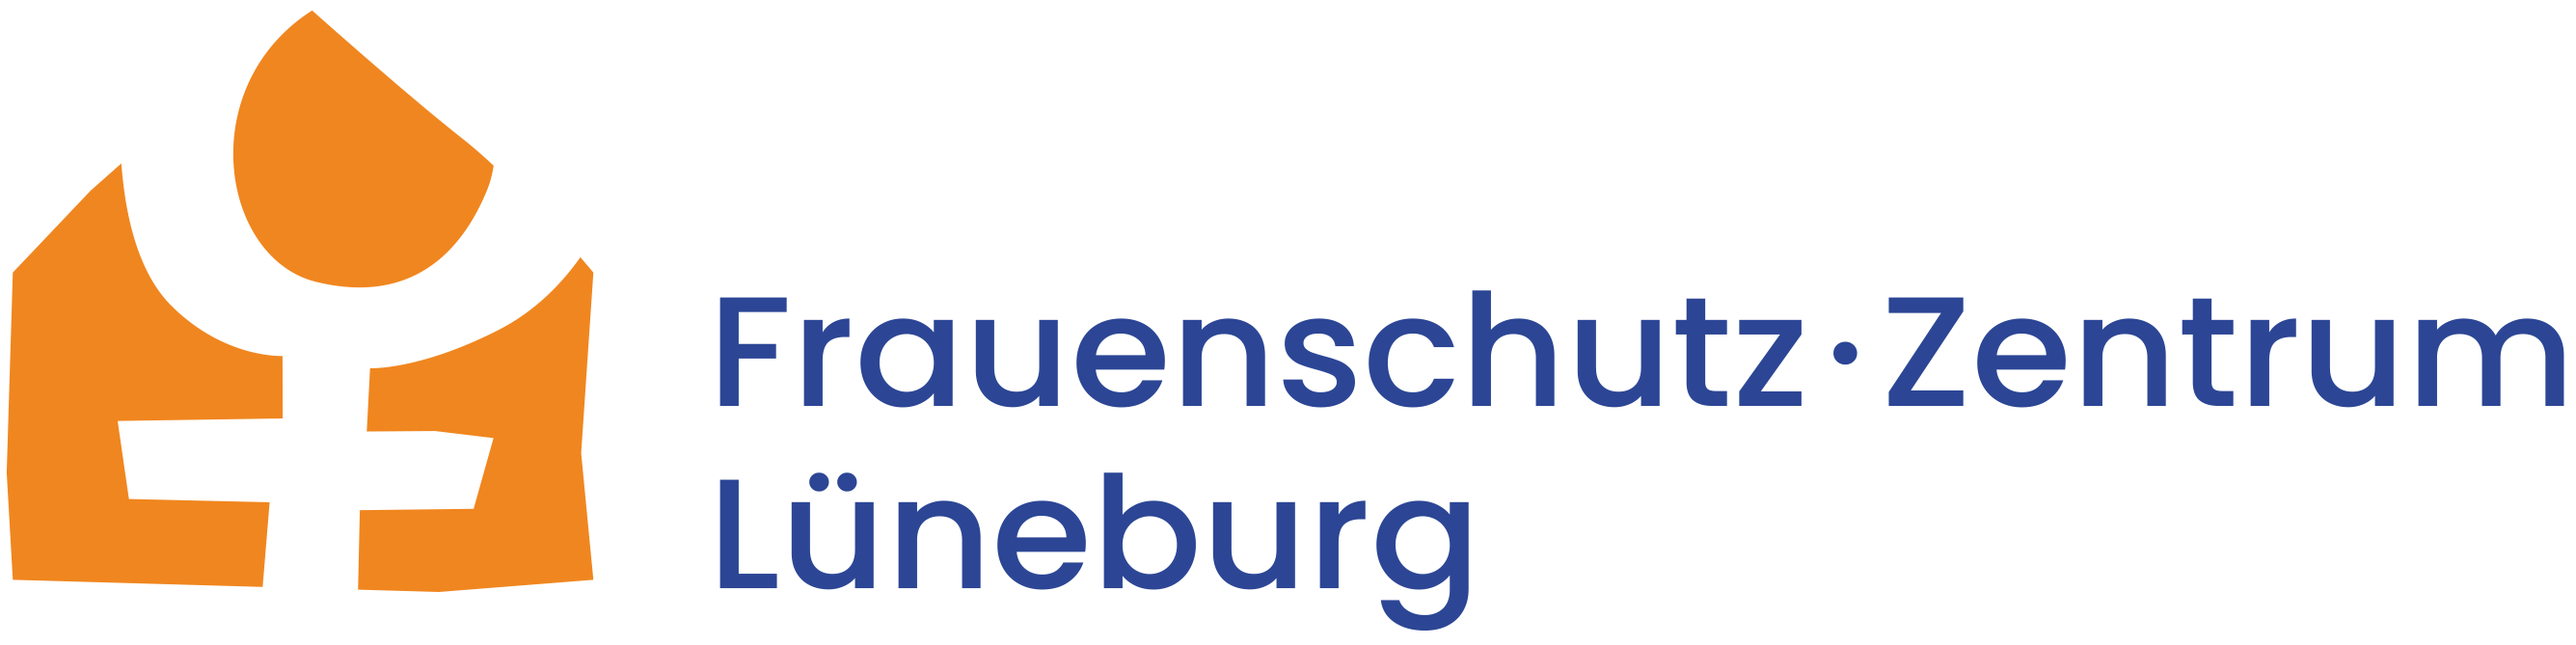 Frauenschutzzentrum Lüneburg